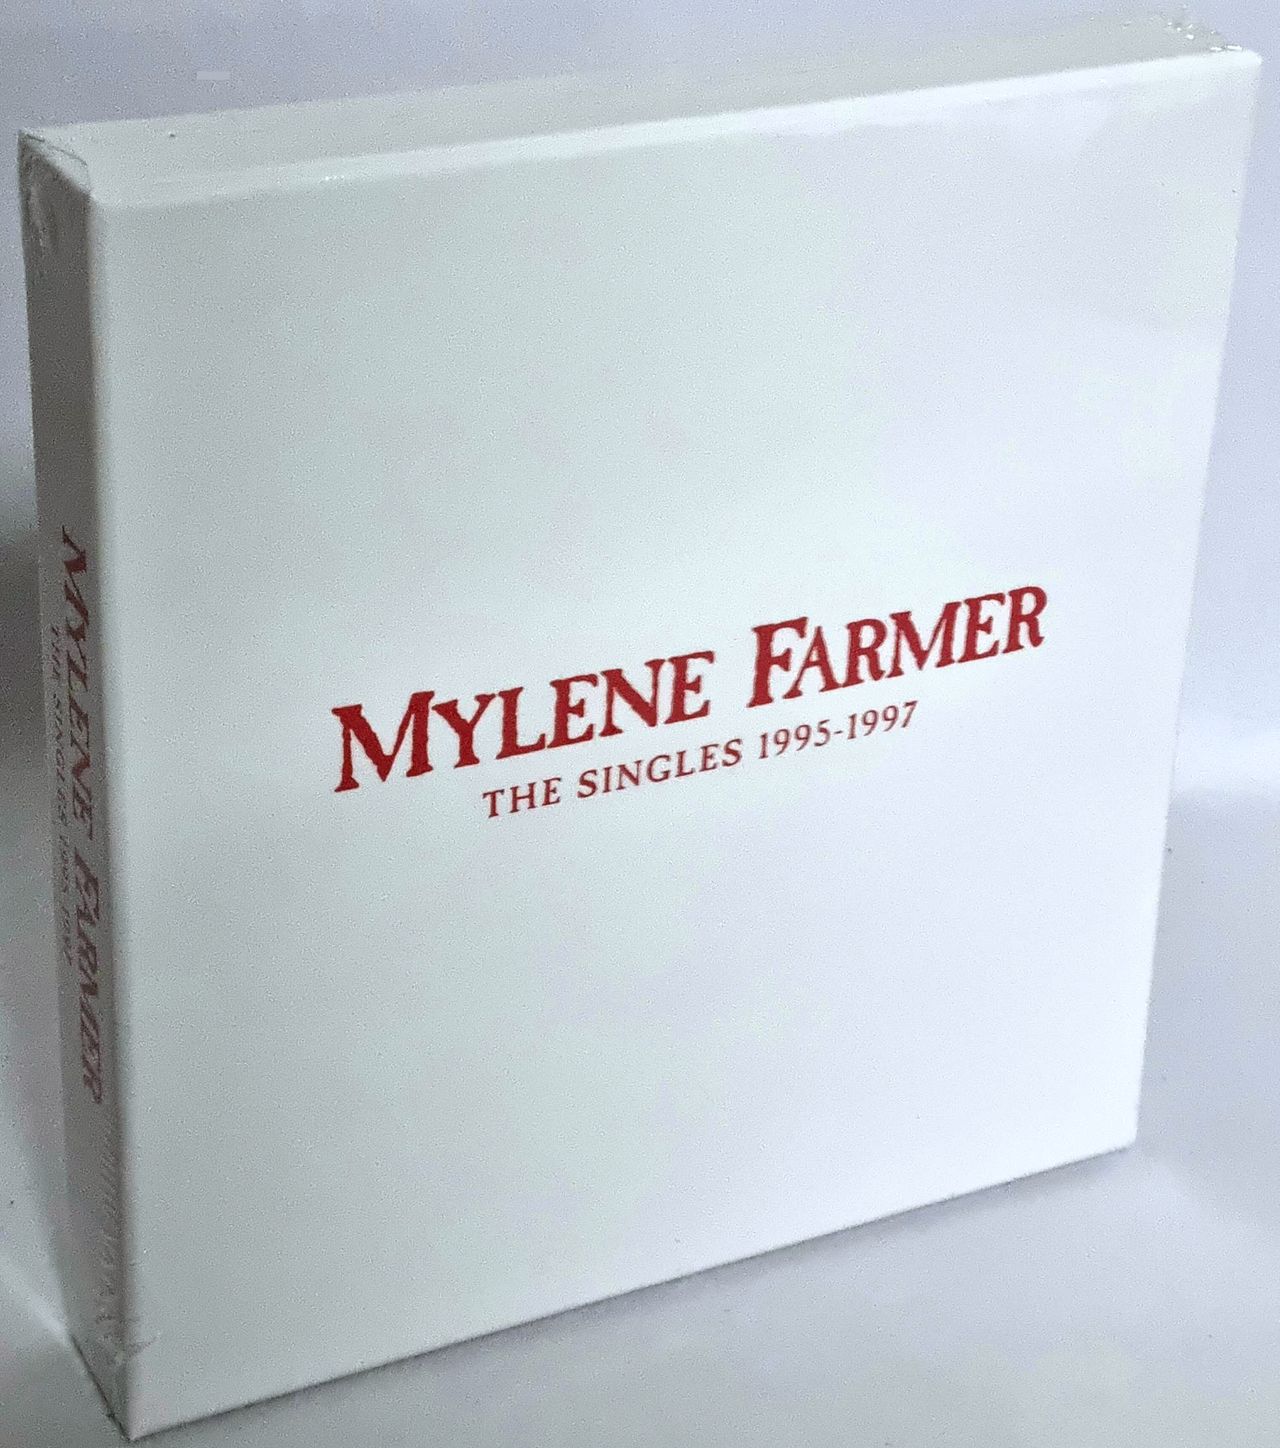 Mylene Farmer The Singles 1995-1997 - Sealed French 7" single box set 073926-2